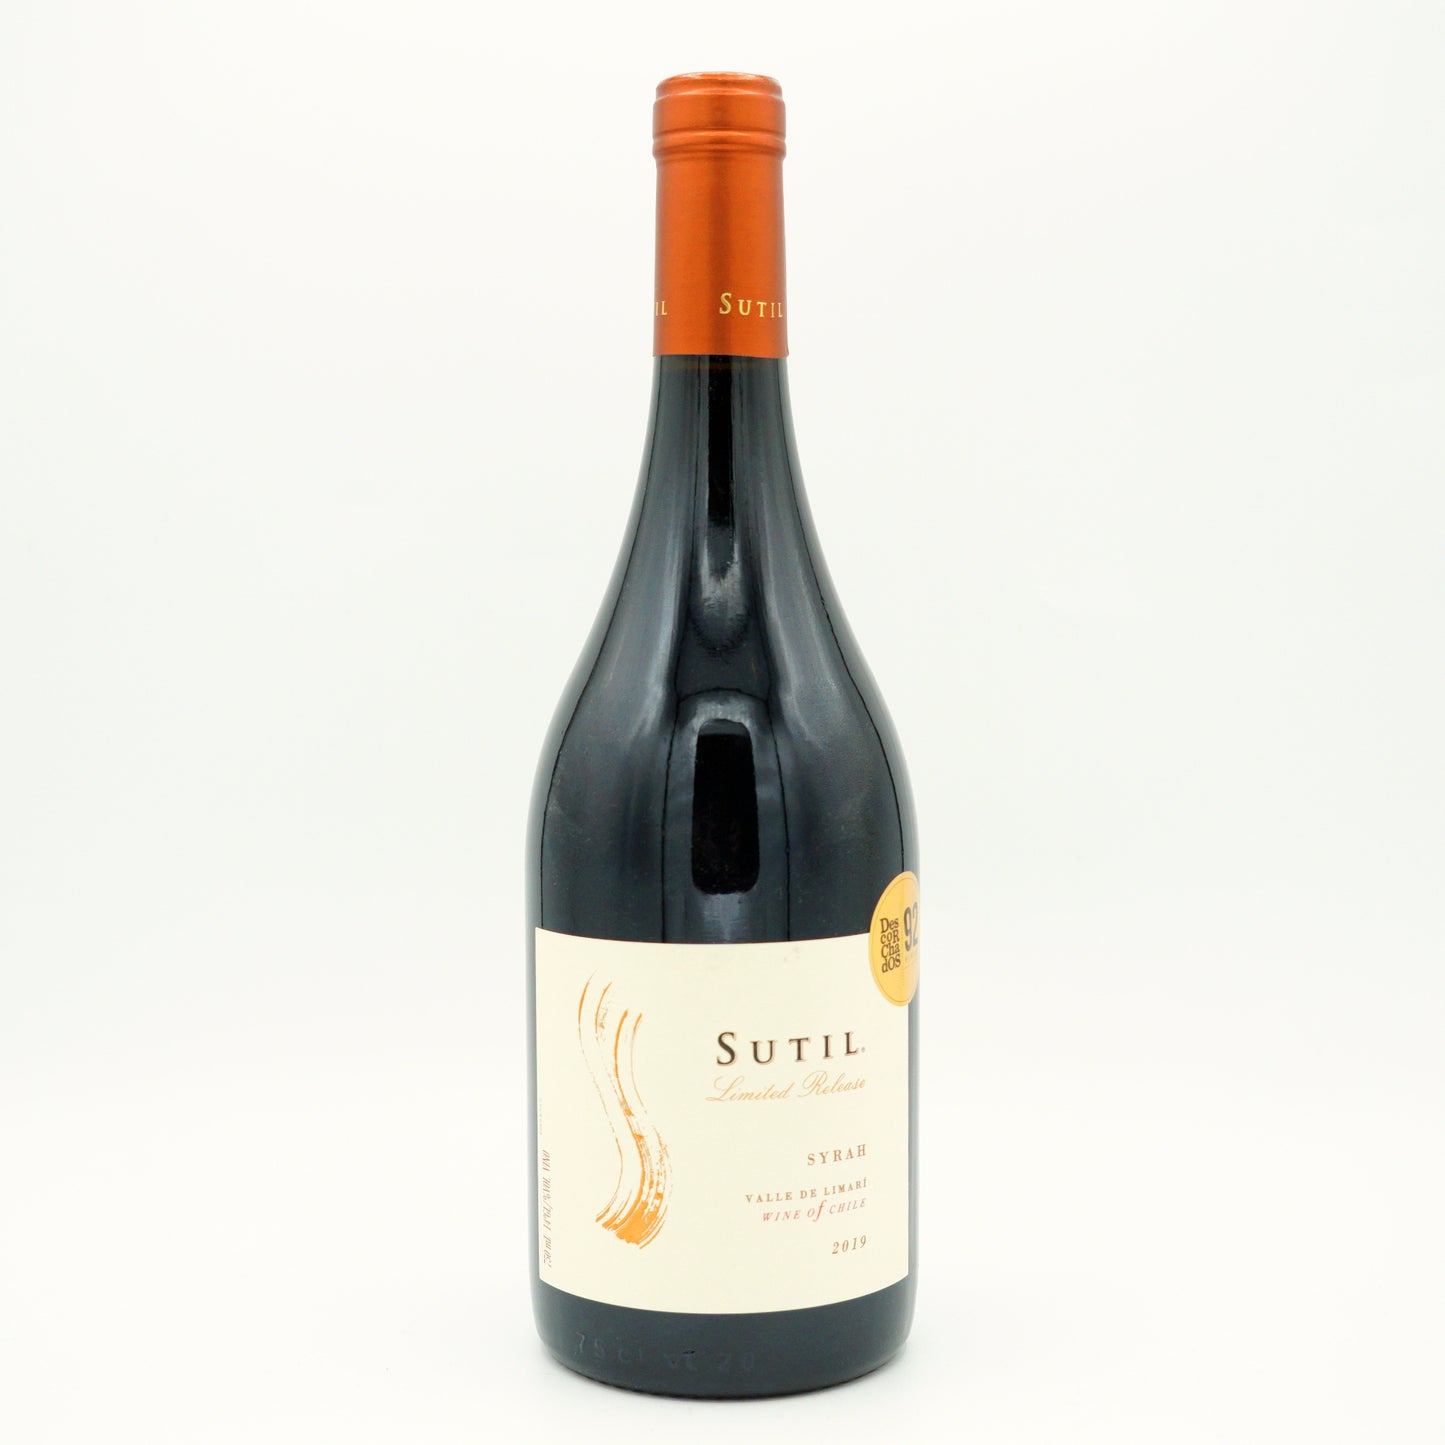 Sutil limited release Syrah, Valle De Limari